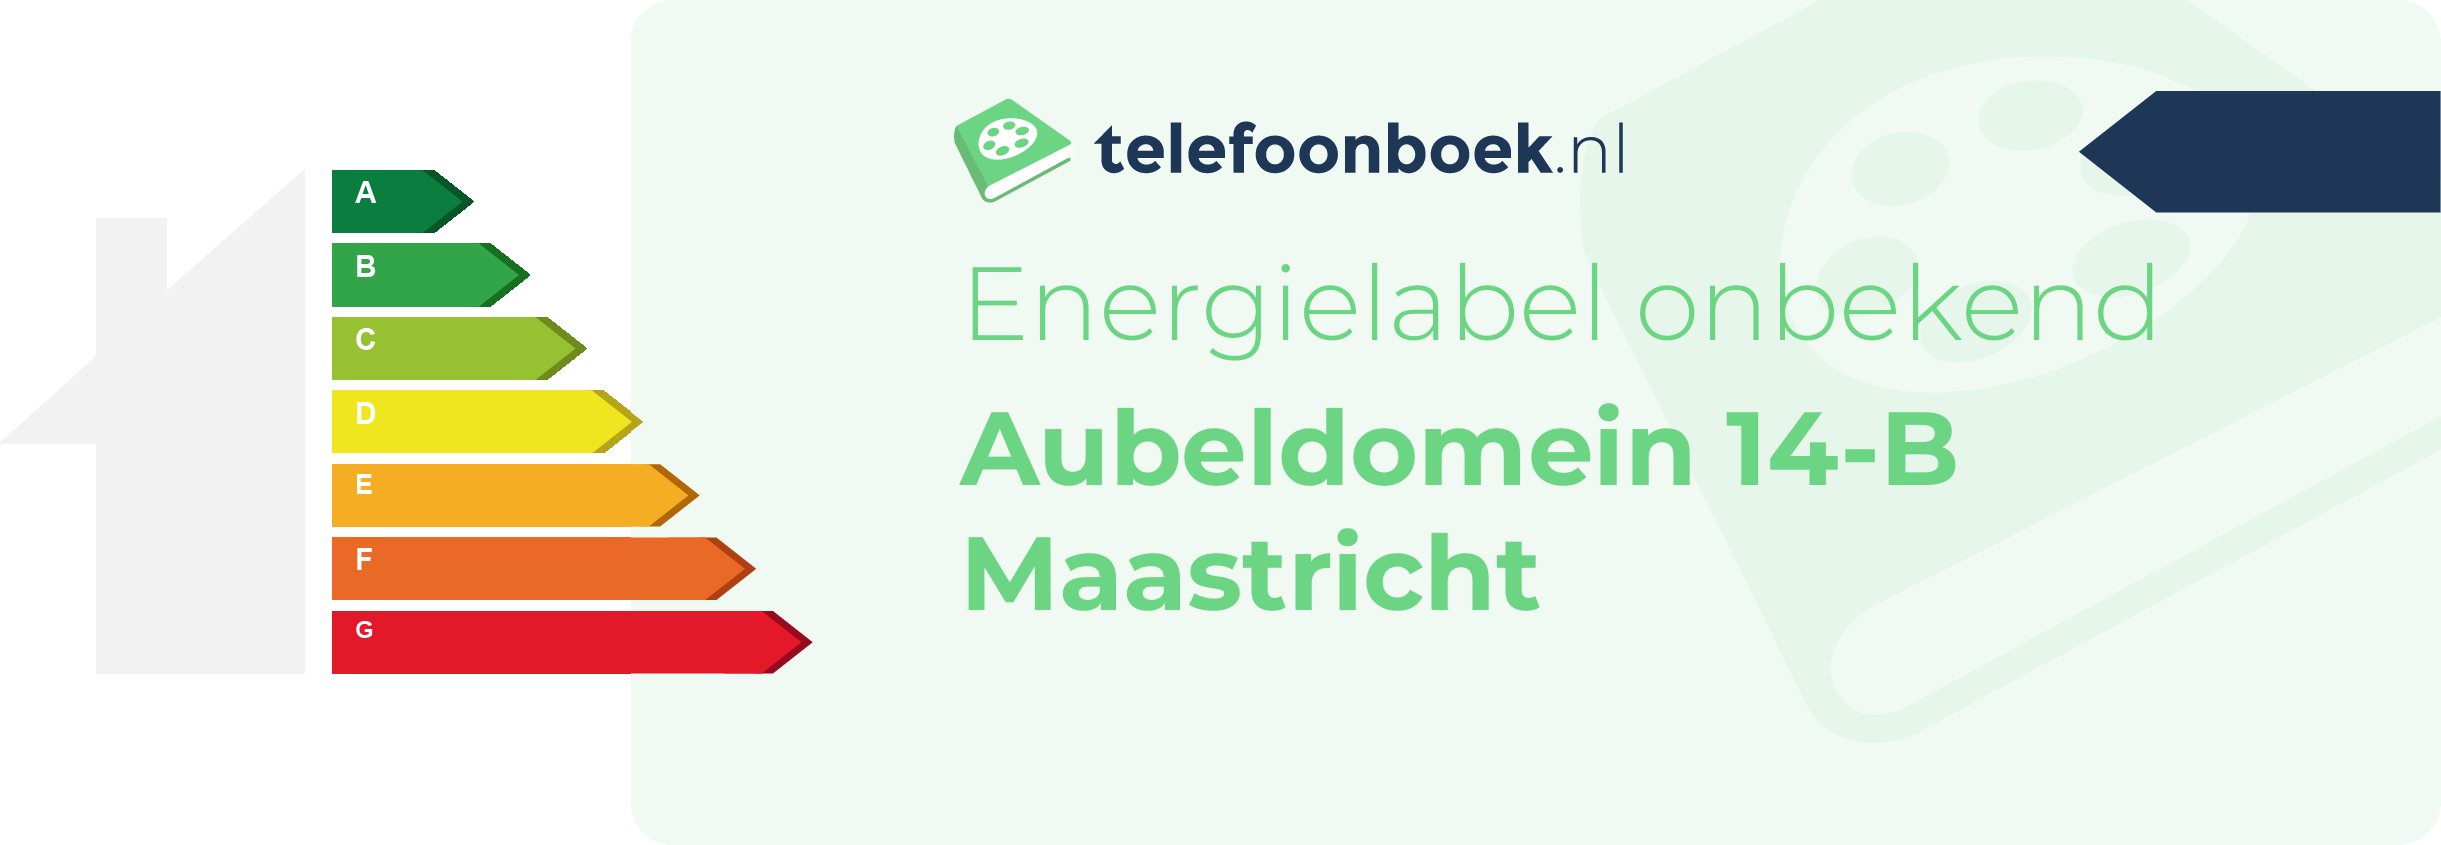 Energielabel Aubeldomein 14-B Maastricht